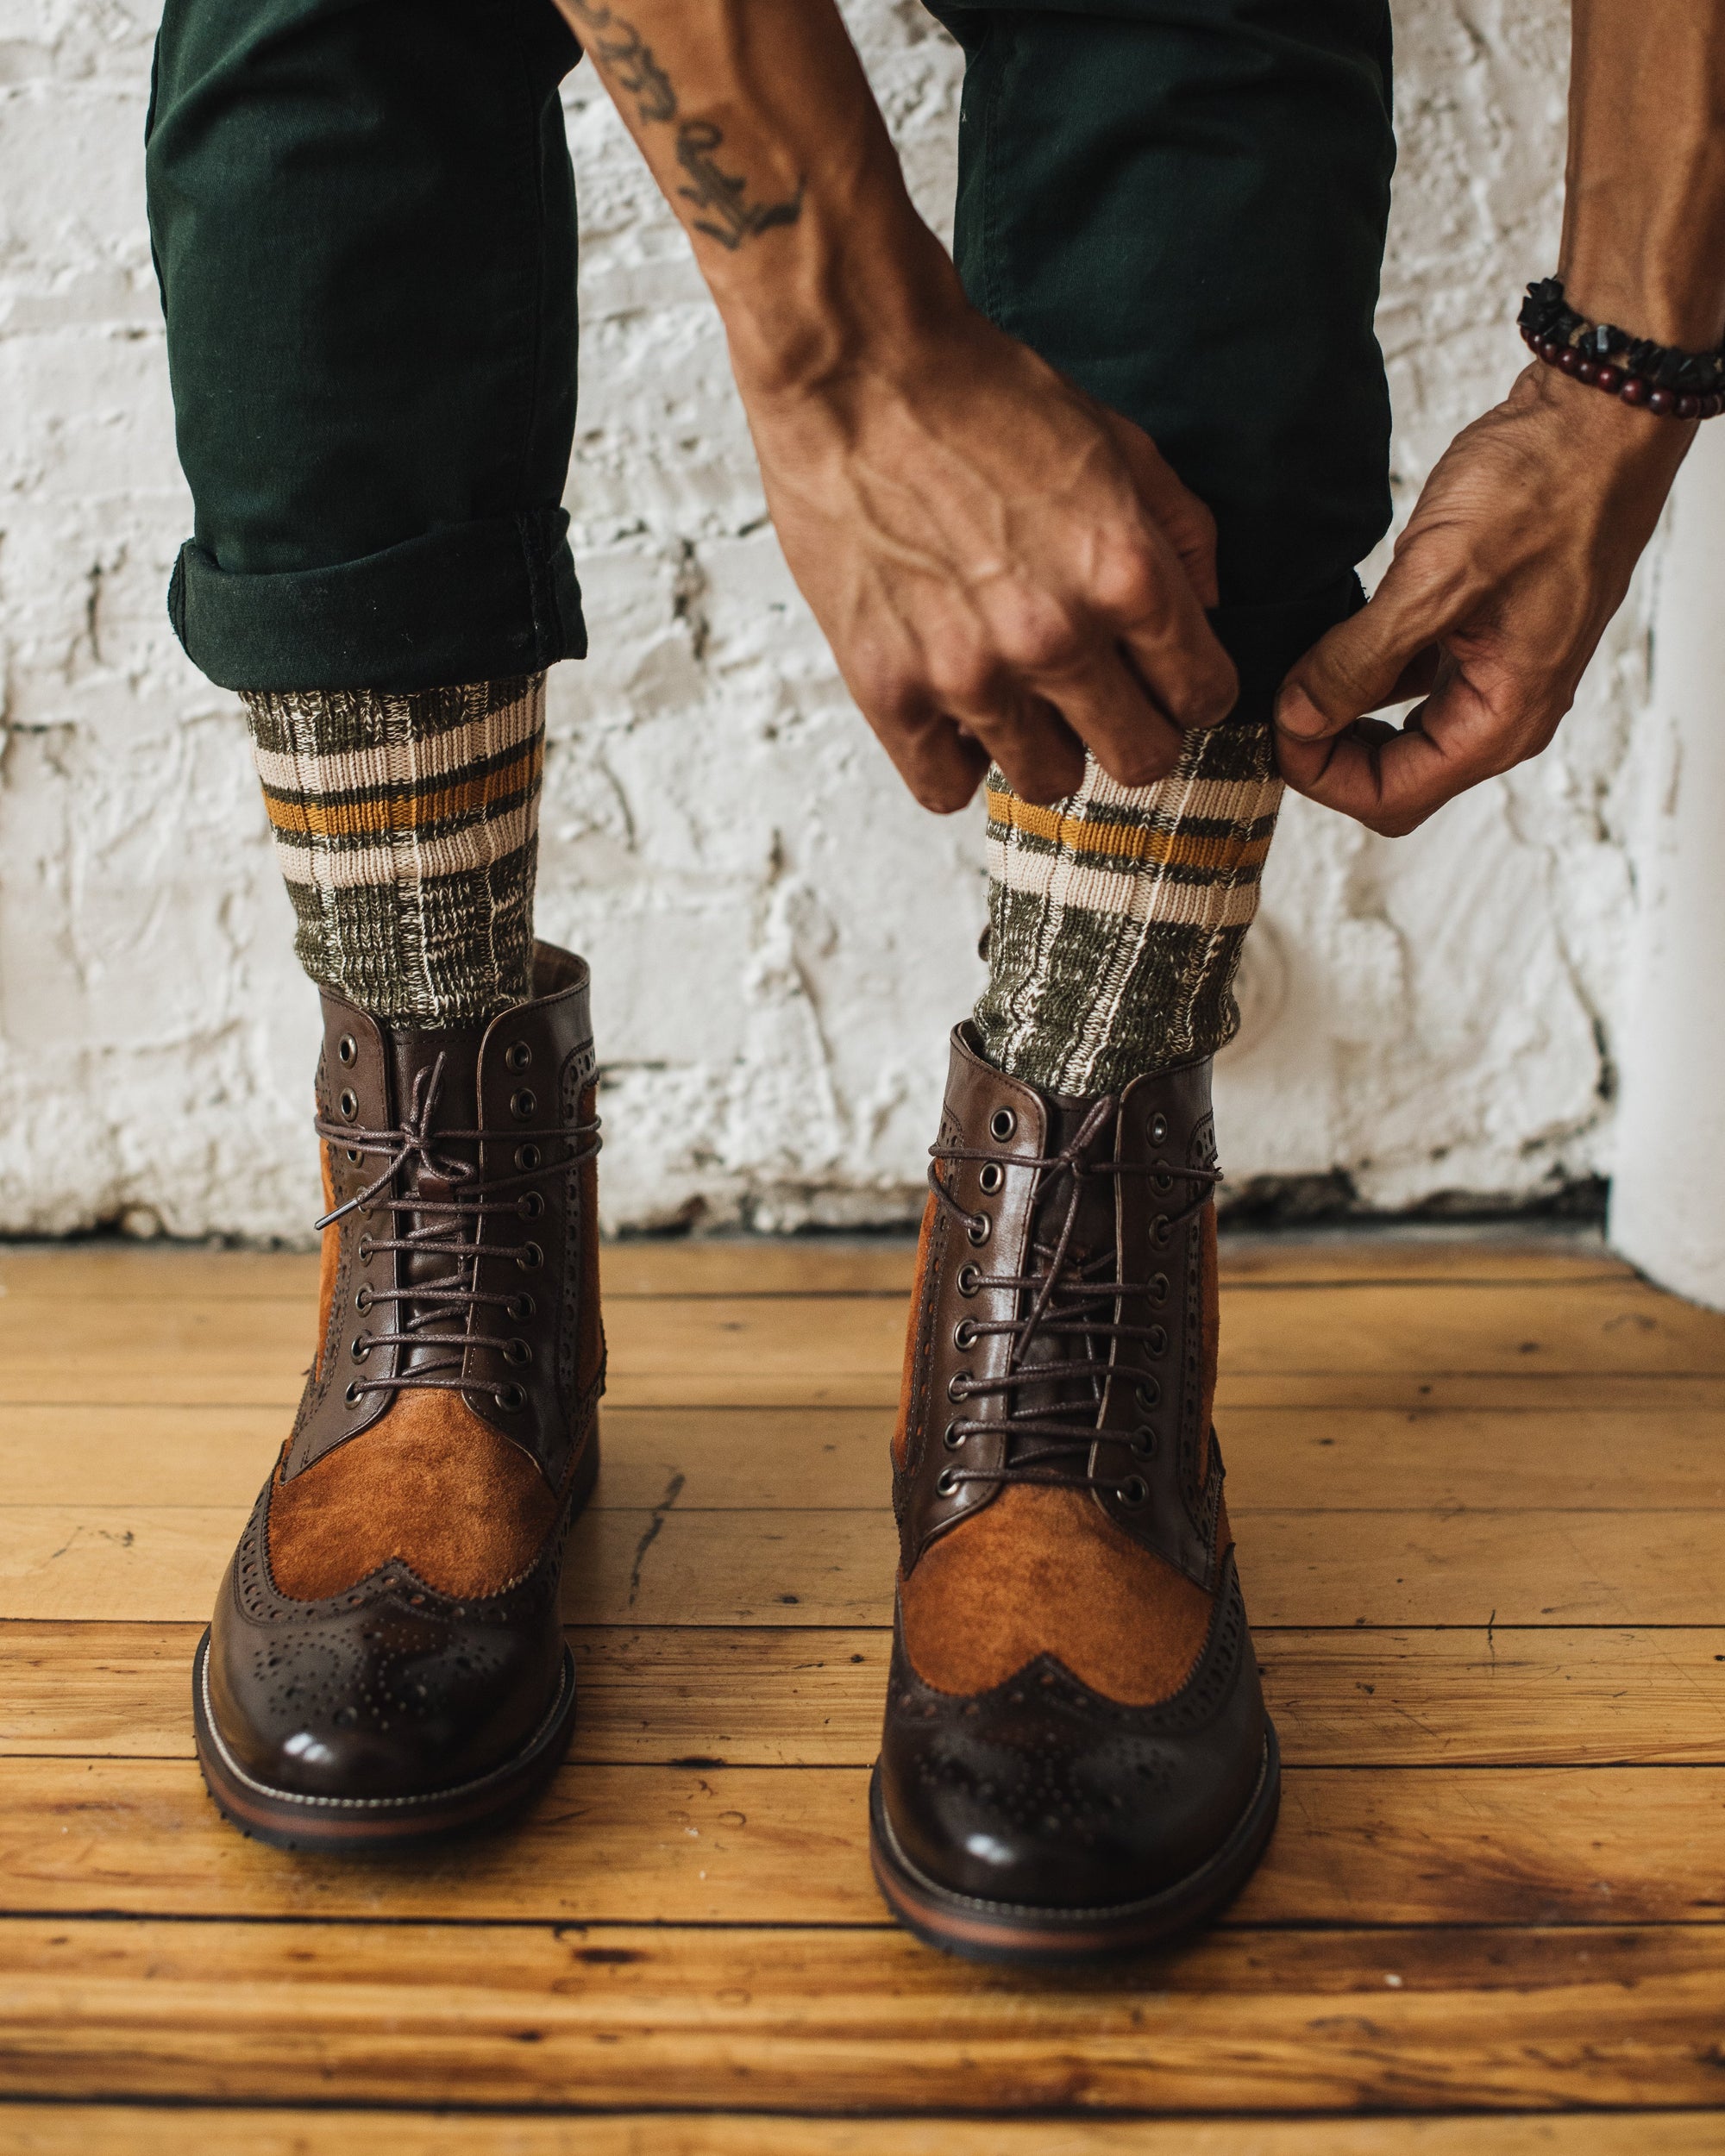 Five popular men’s sock styles